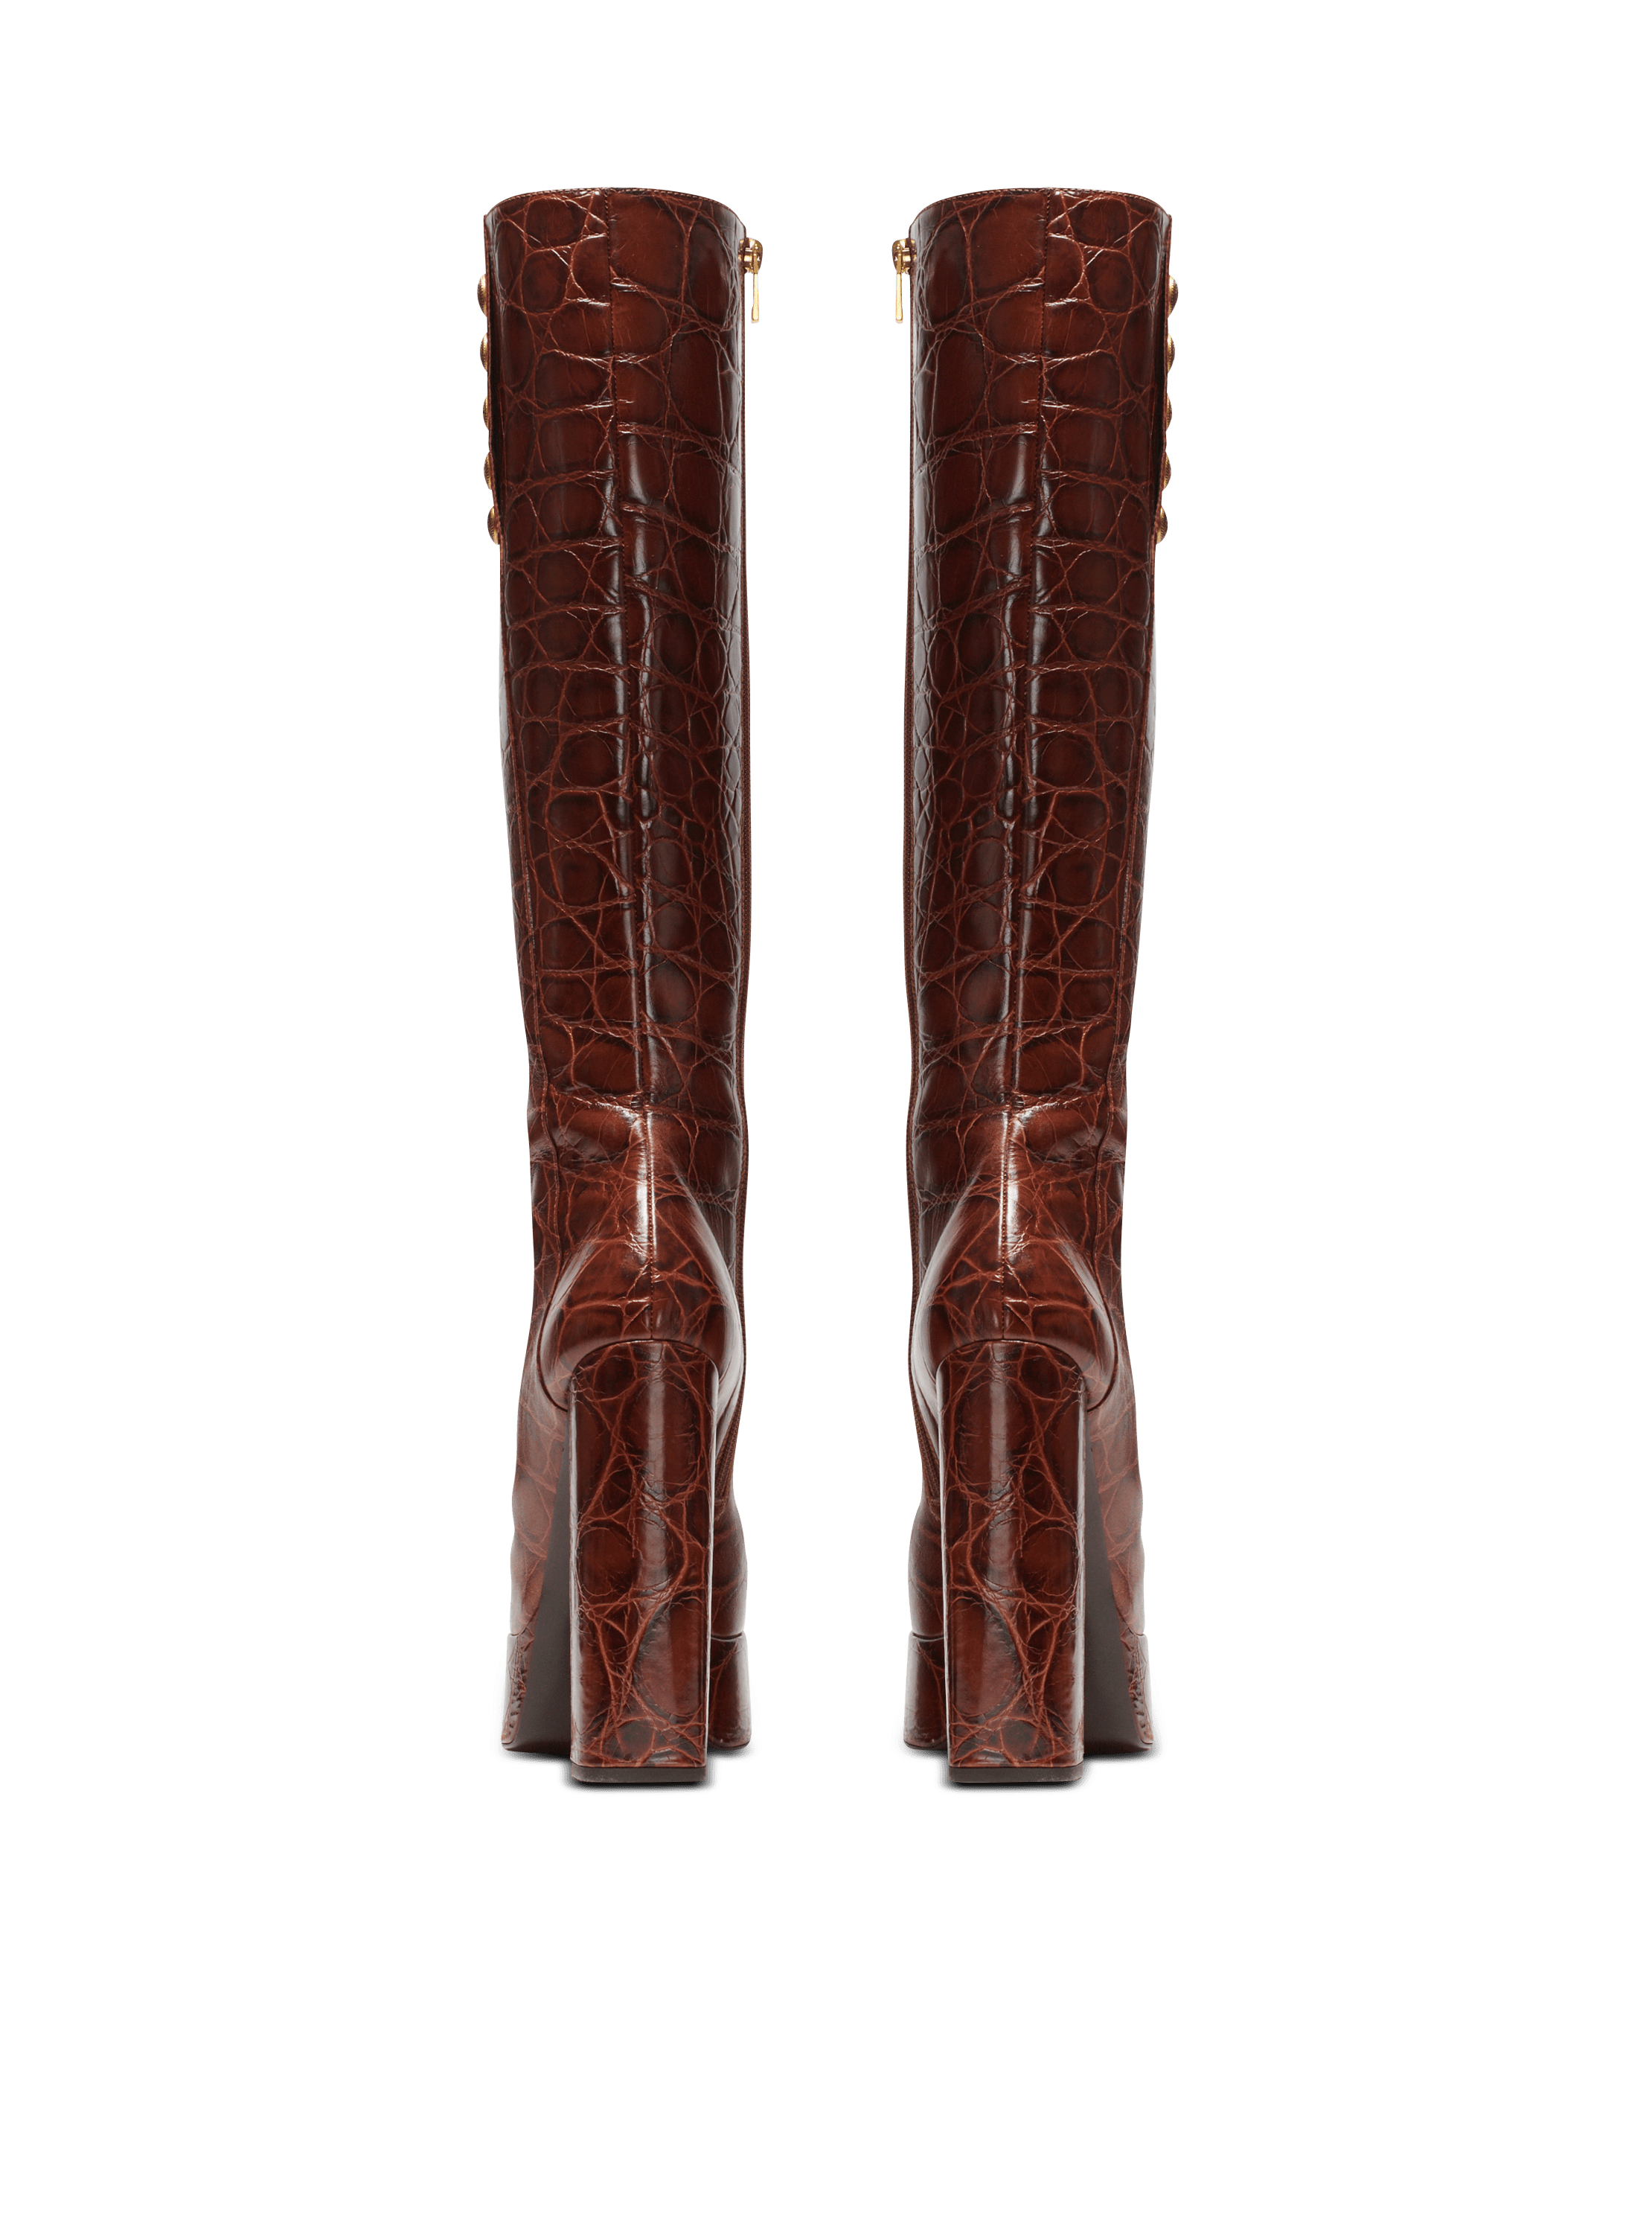 Balmain crocodile-effect Leather Belt - Brown